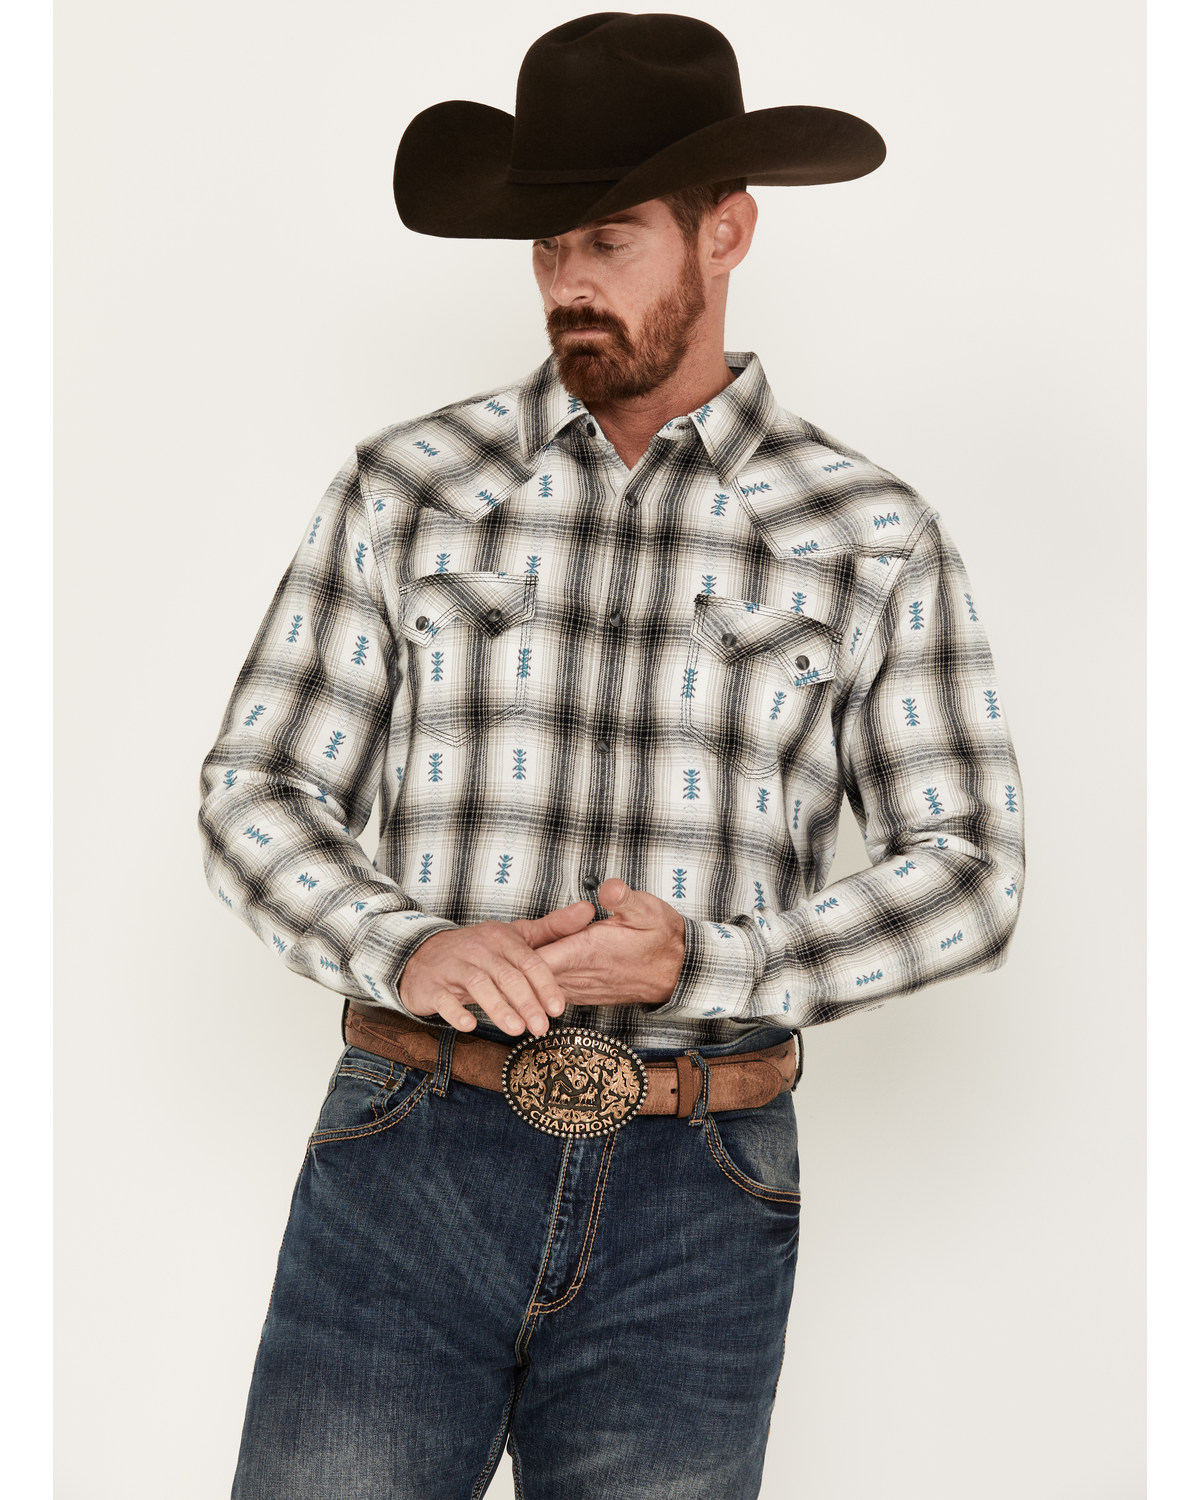 Moonshine Spirit Men's Southwestern Plaid Print Long Sleeve Snap Flannel Shirt